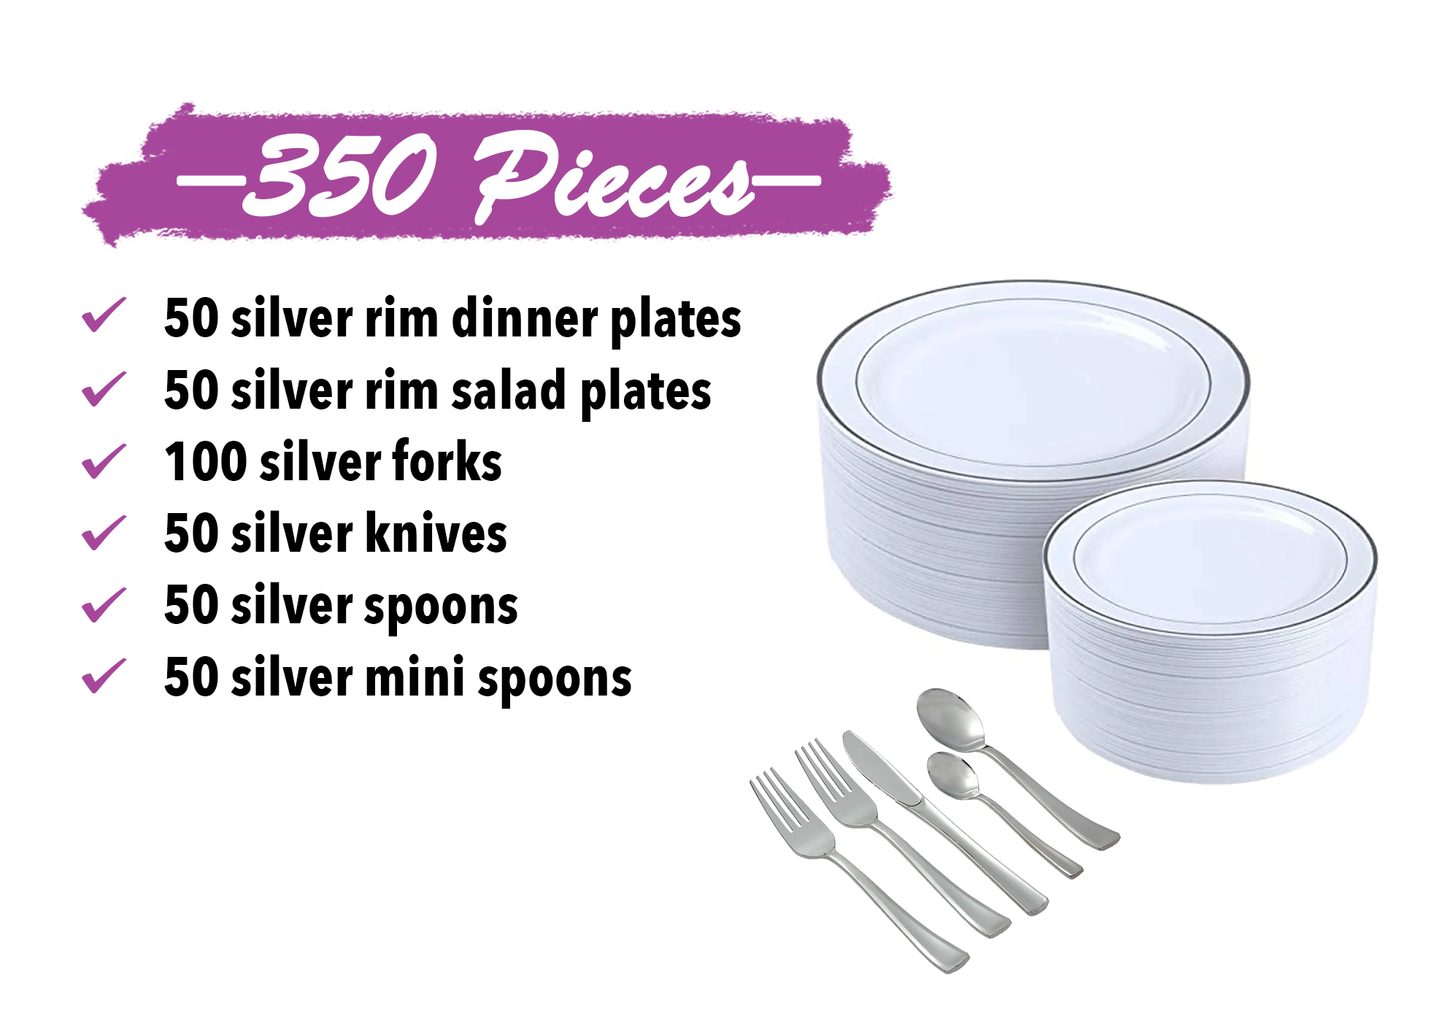 350-Piece Silver Dinnerware set for 50 guests Includes: 100 silver rim plastic plates, 250 Silver-colored silverware utensils